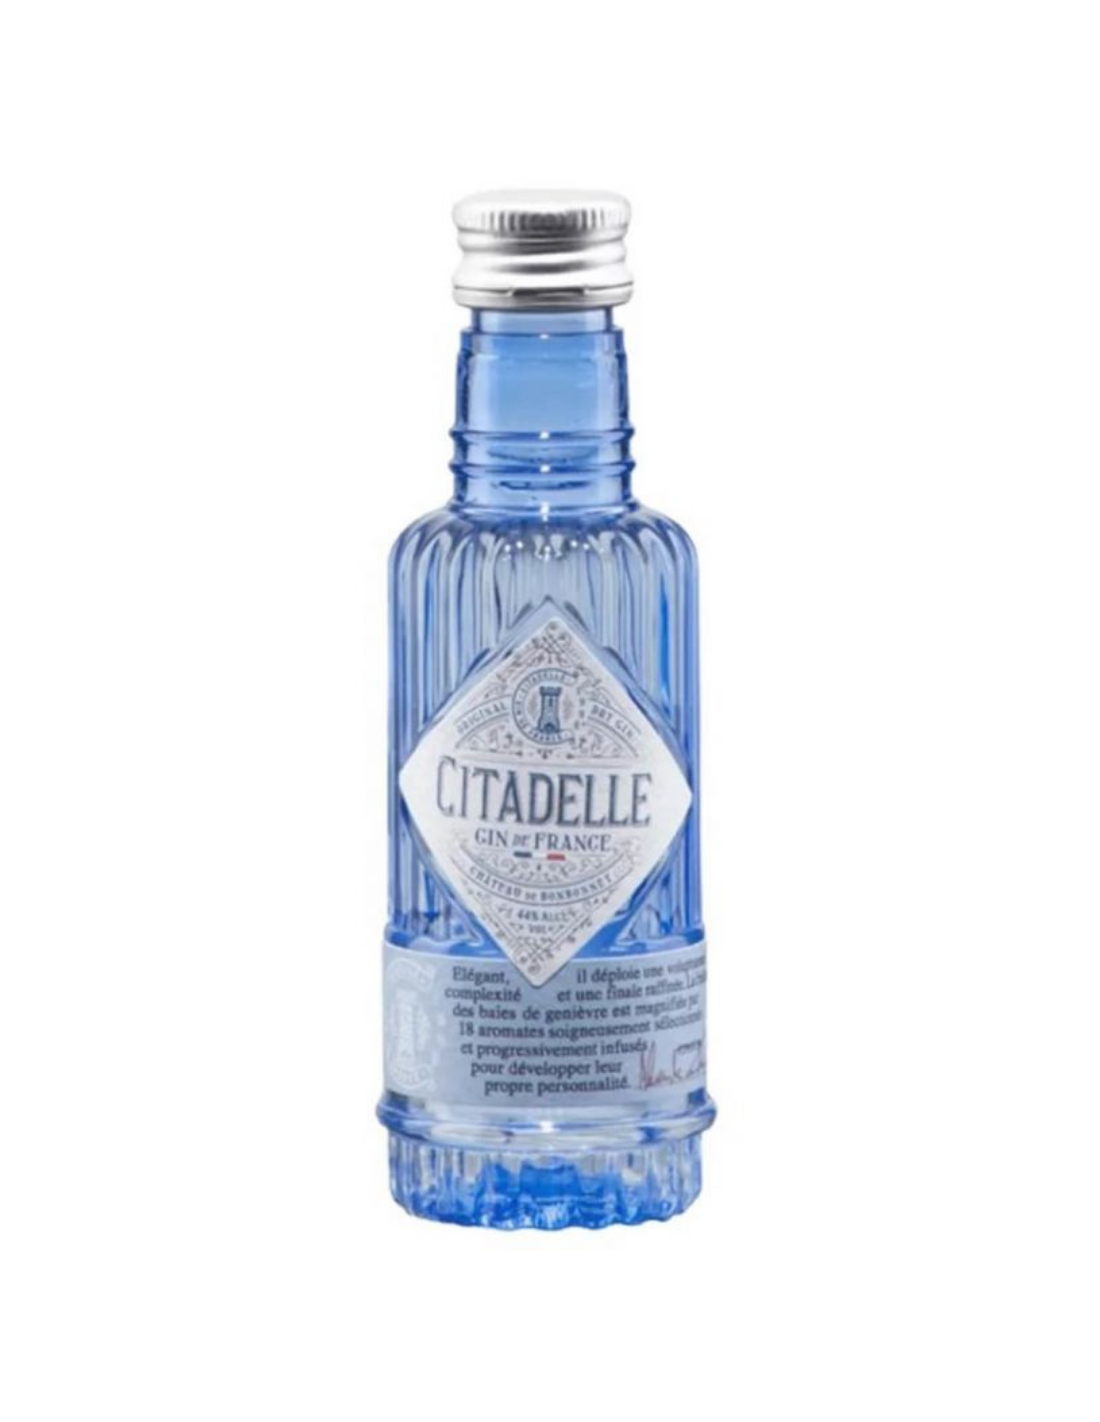 Gin Citadelle, 44% alc., 0.05L, Franta alcooldiscount.ro